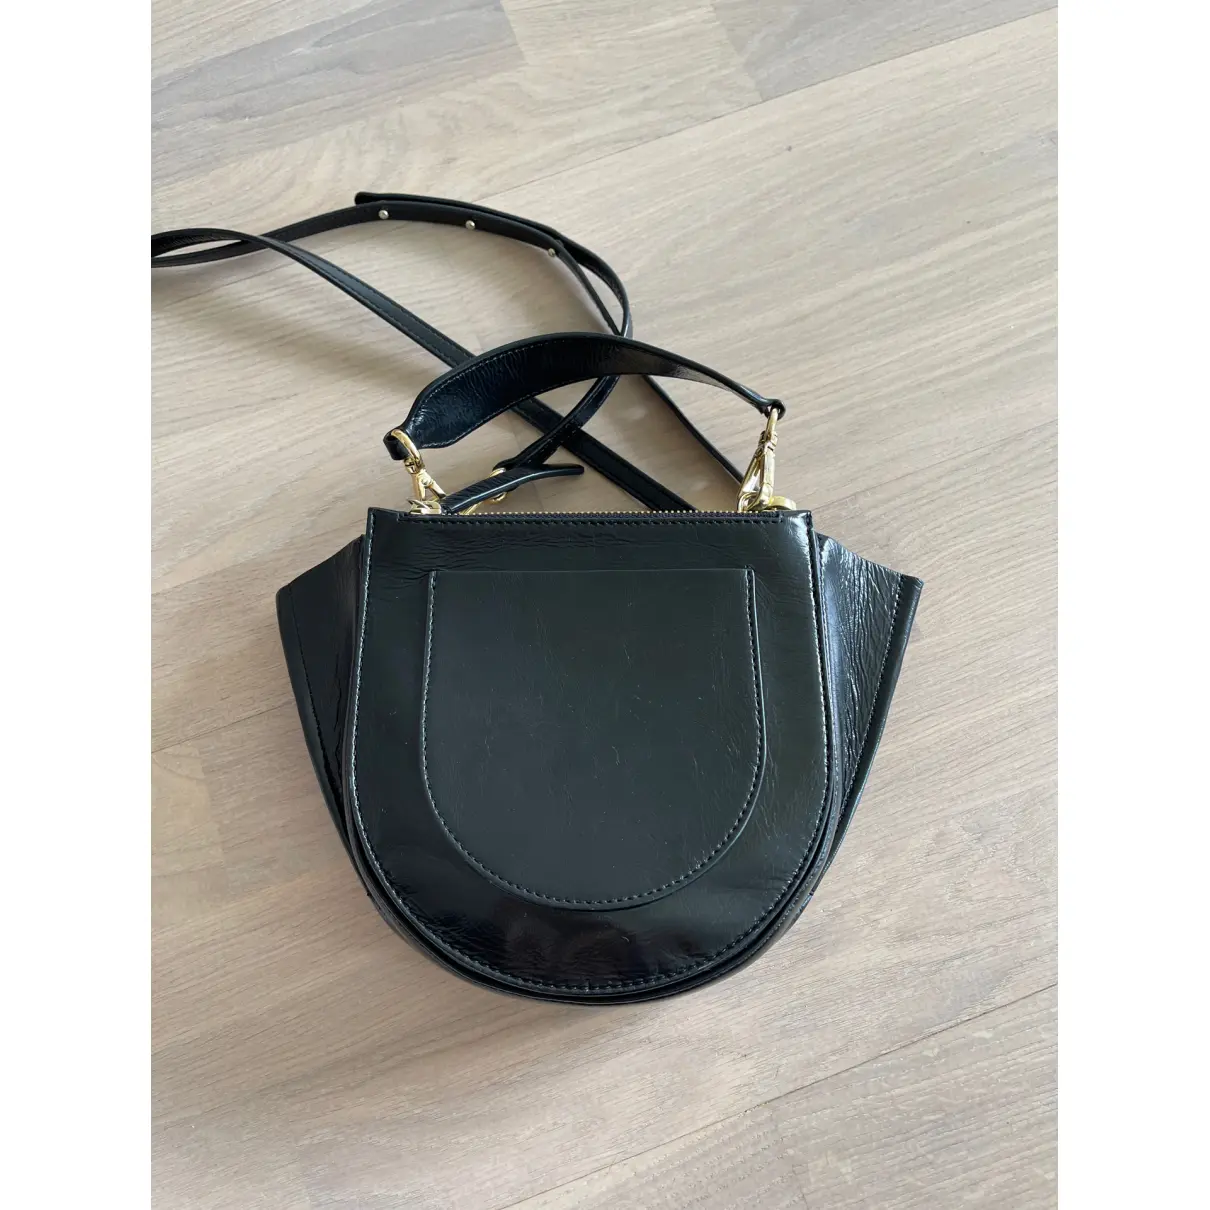 Buy Wandler Hortensia patent leather handbag online